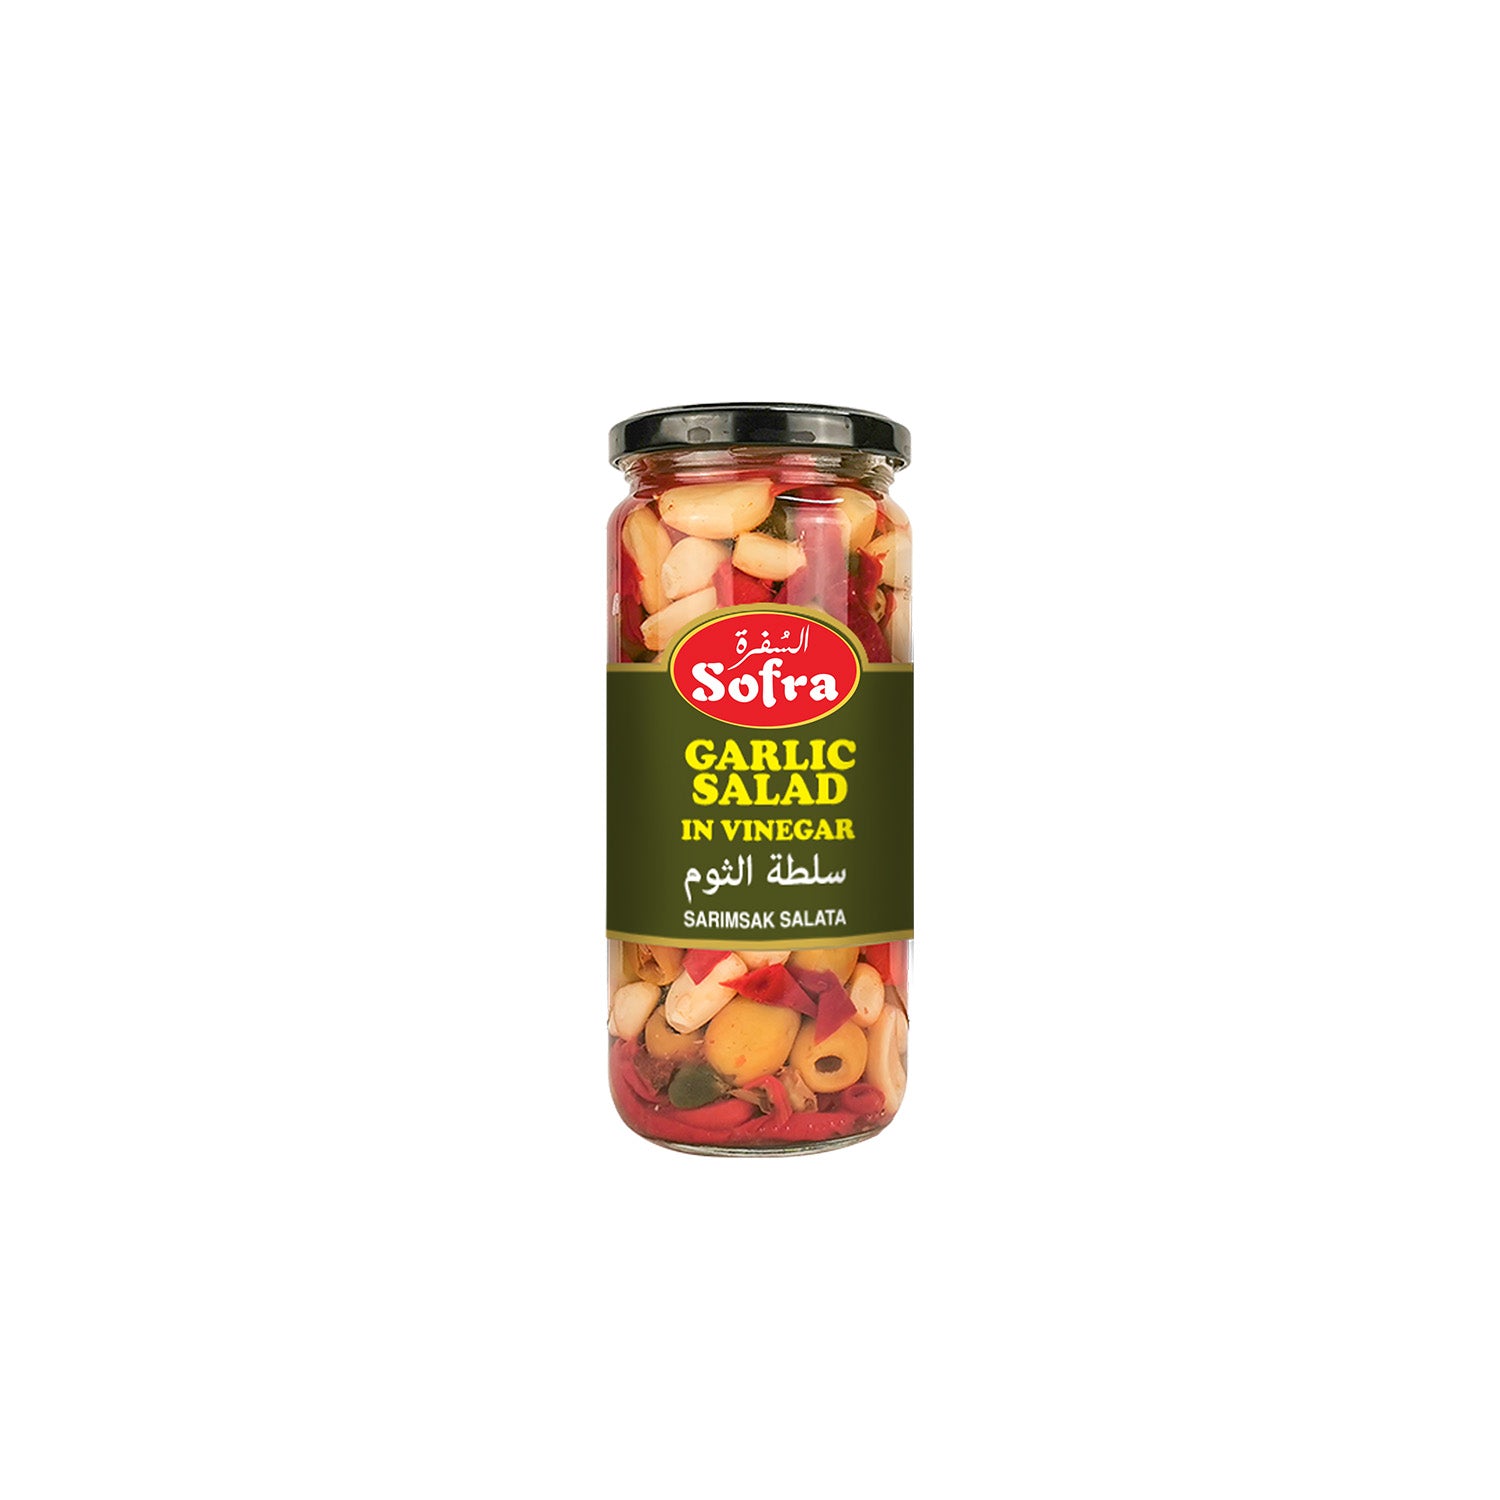 Sofra Garlic Salad 480g